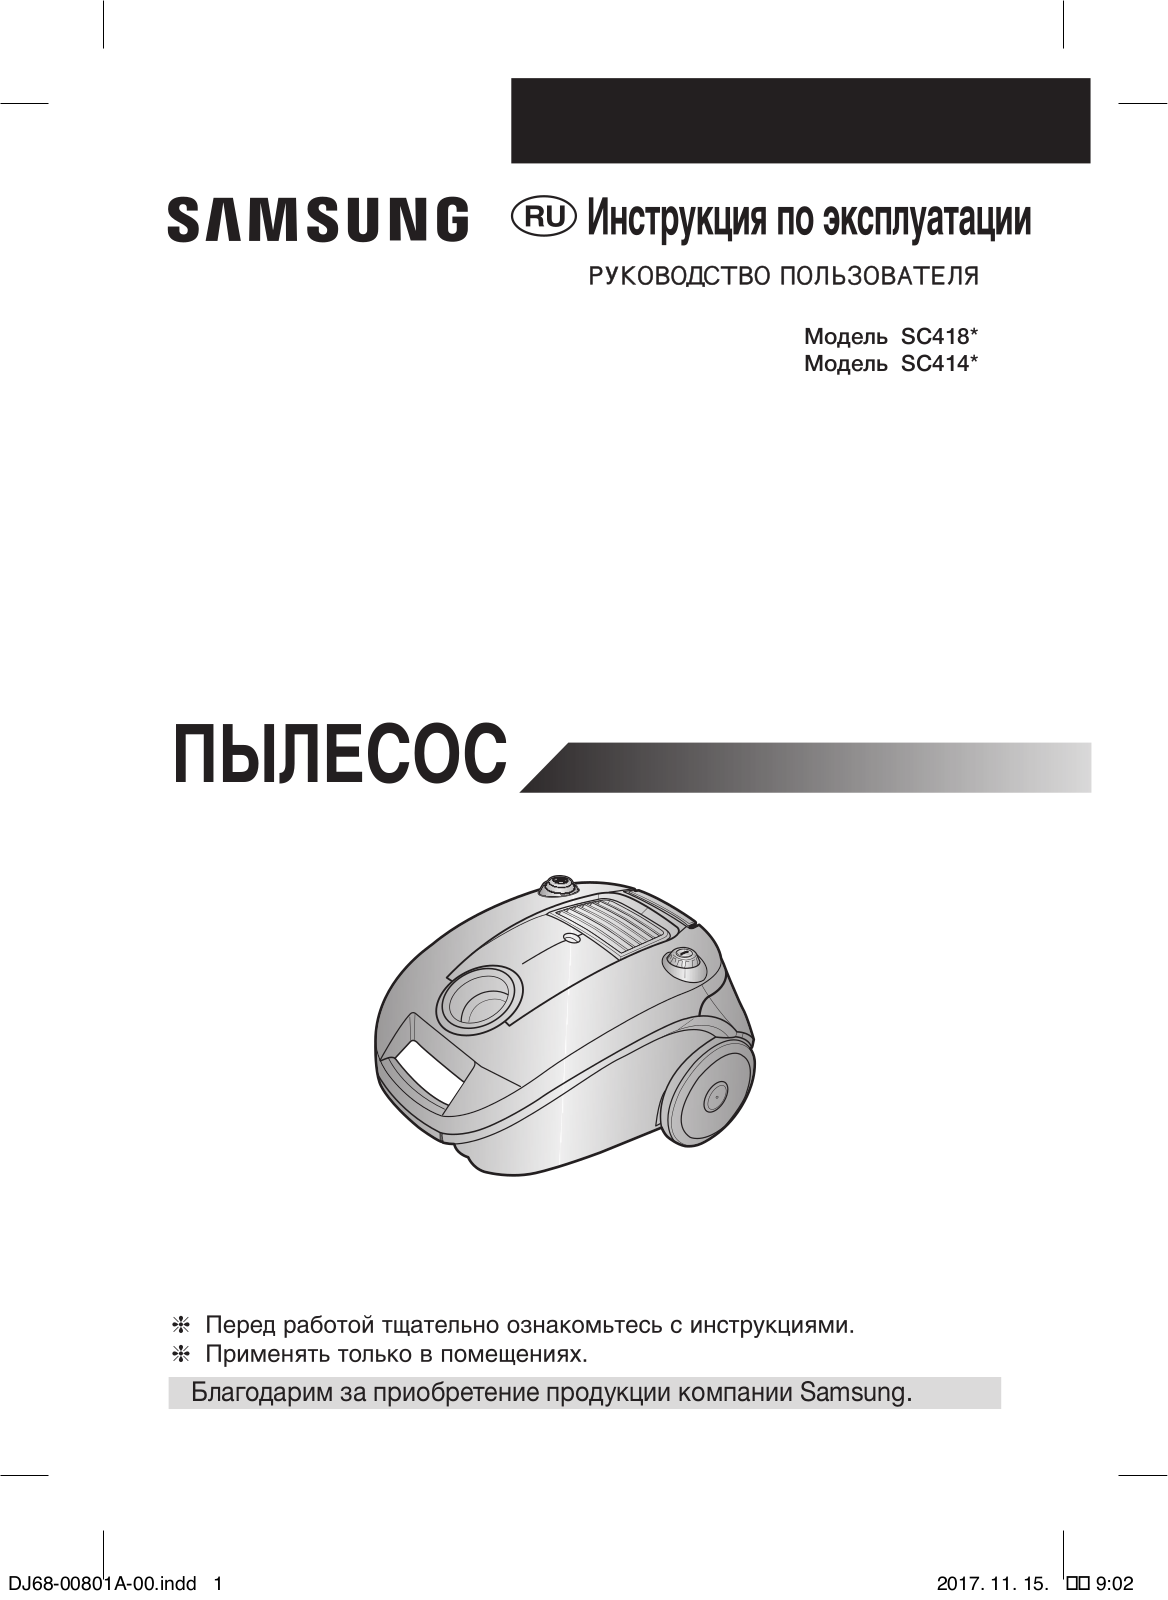 Samsung VCC4140V3A User Manual